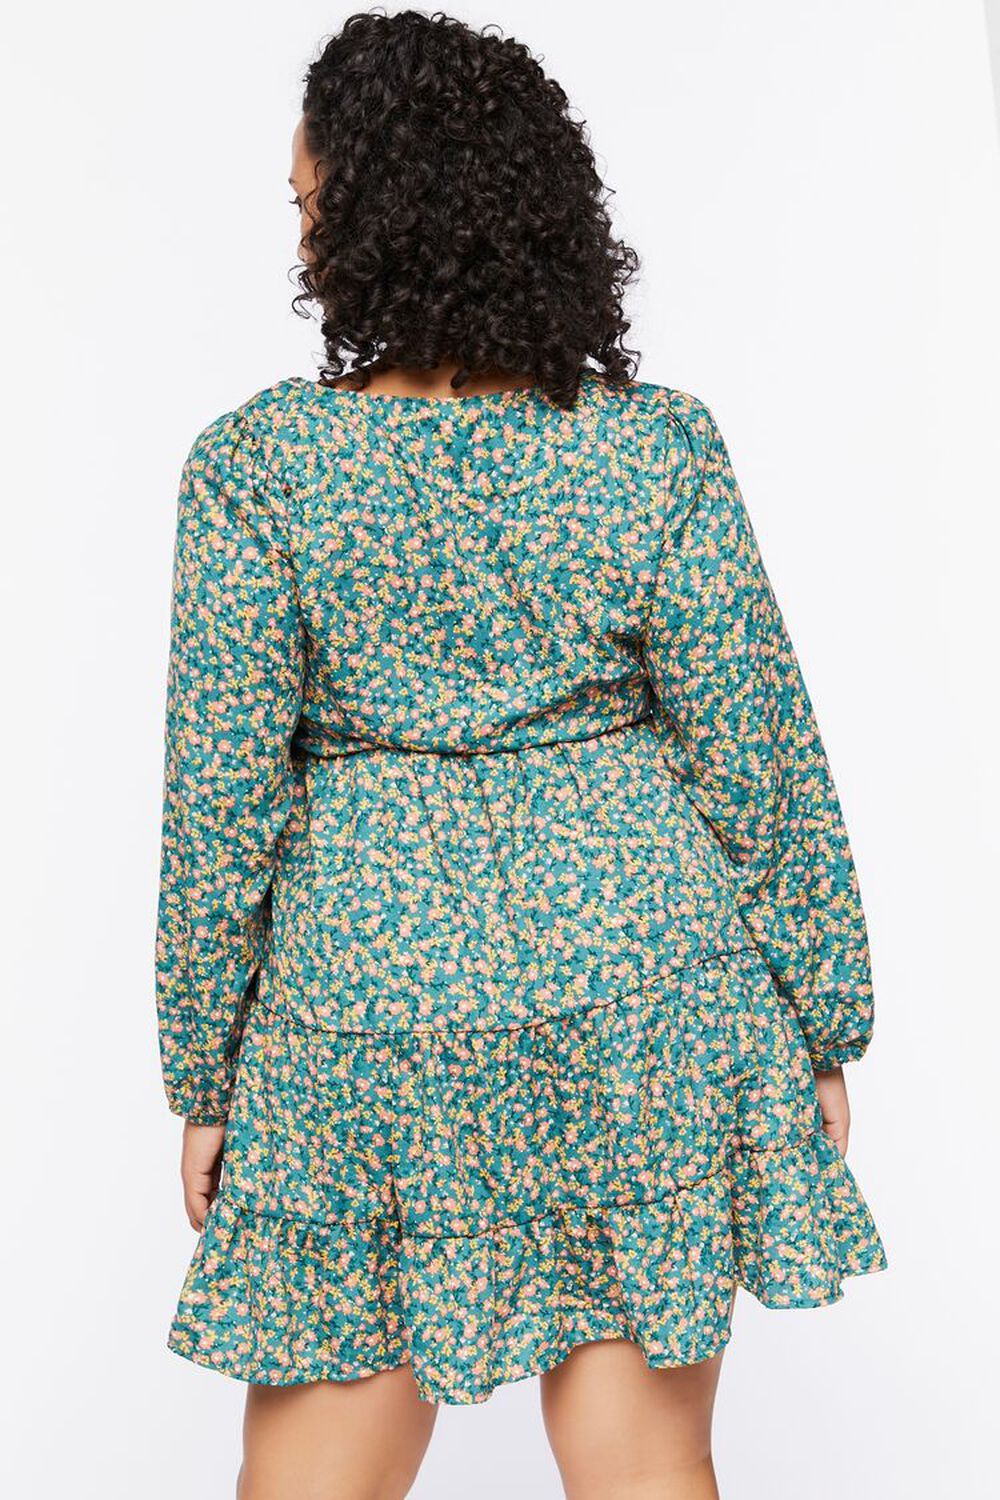 GREEN/MULTI Plus Size Floral Print Mini Dress, image 3